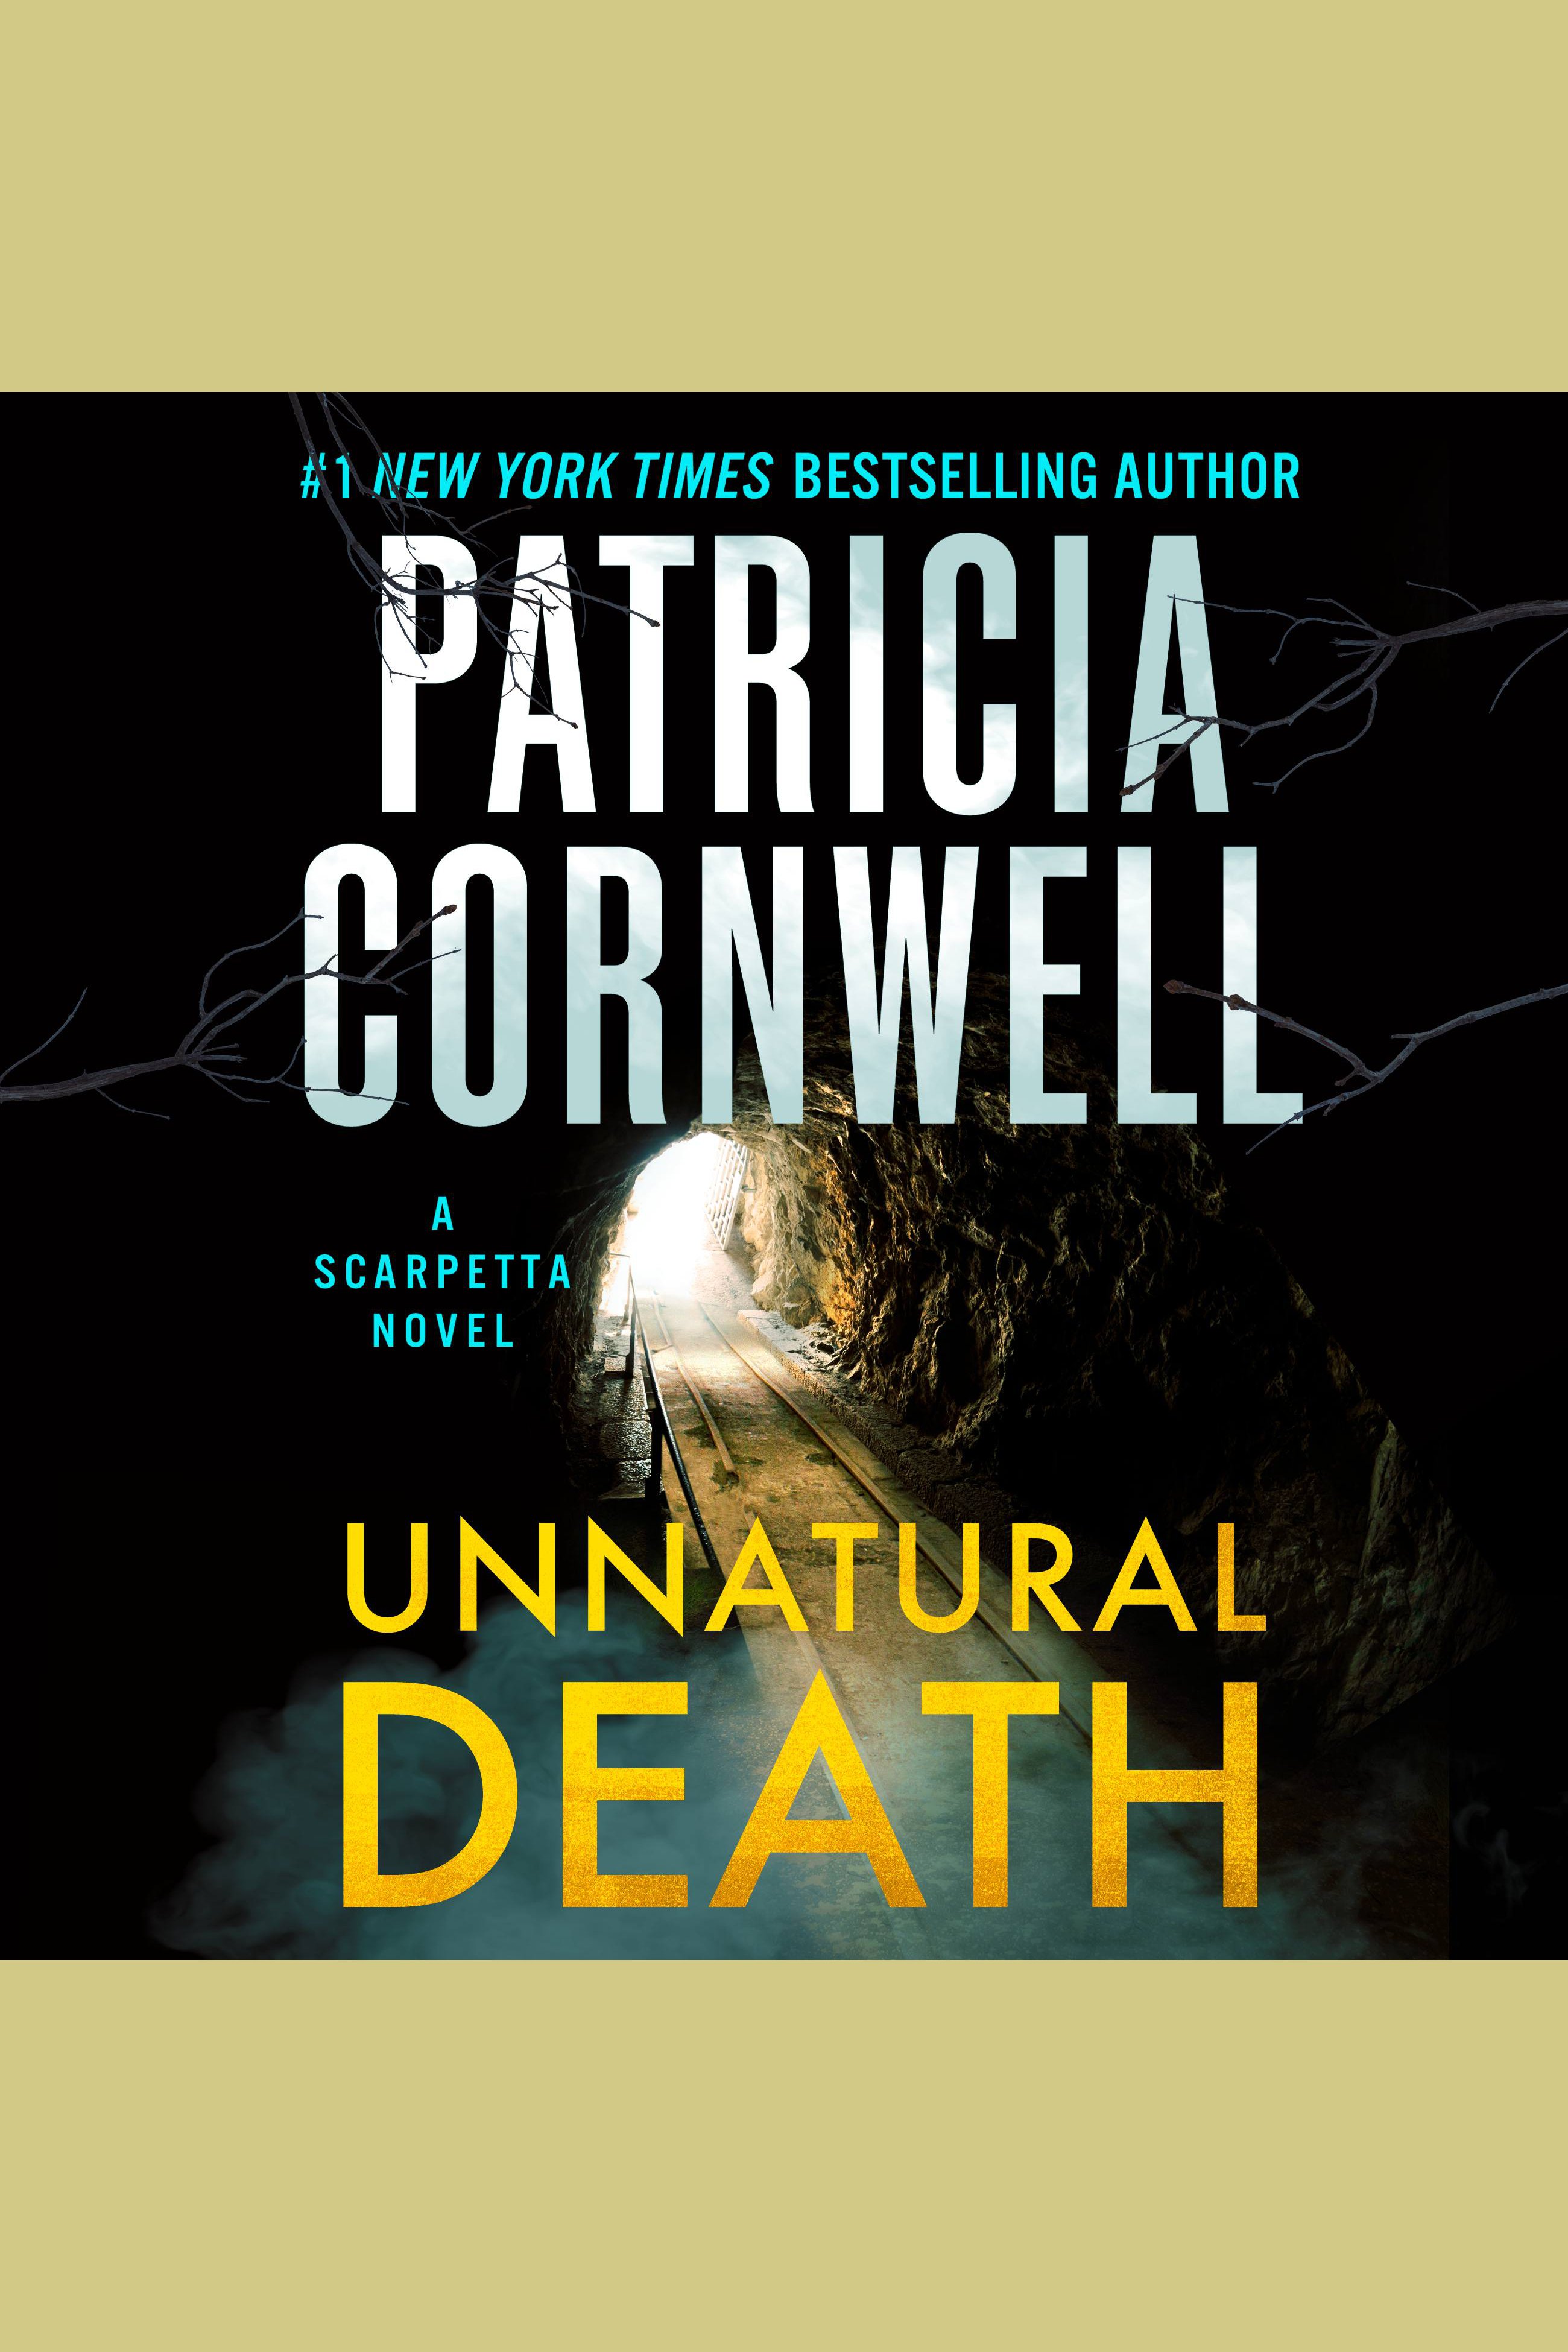 Unnatural Death A Scarpetta Novel cover image